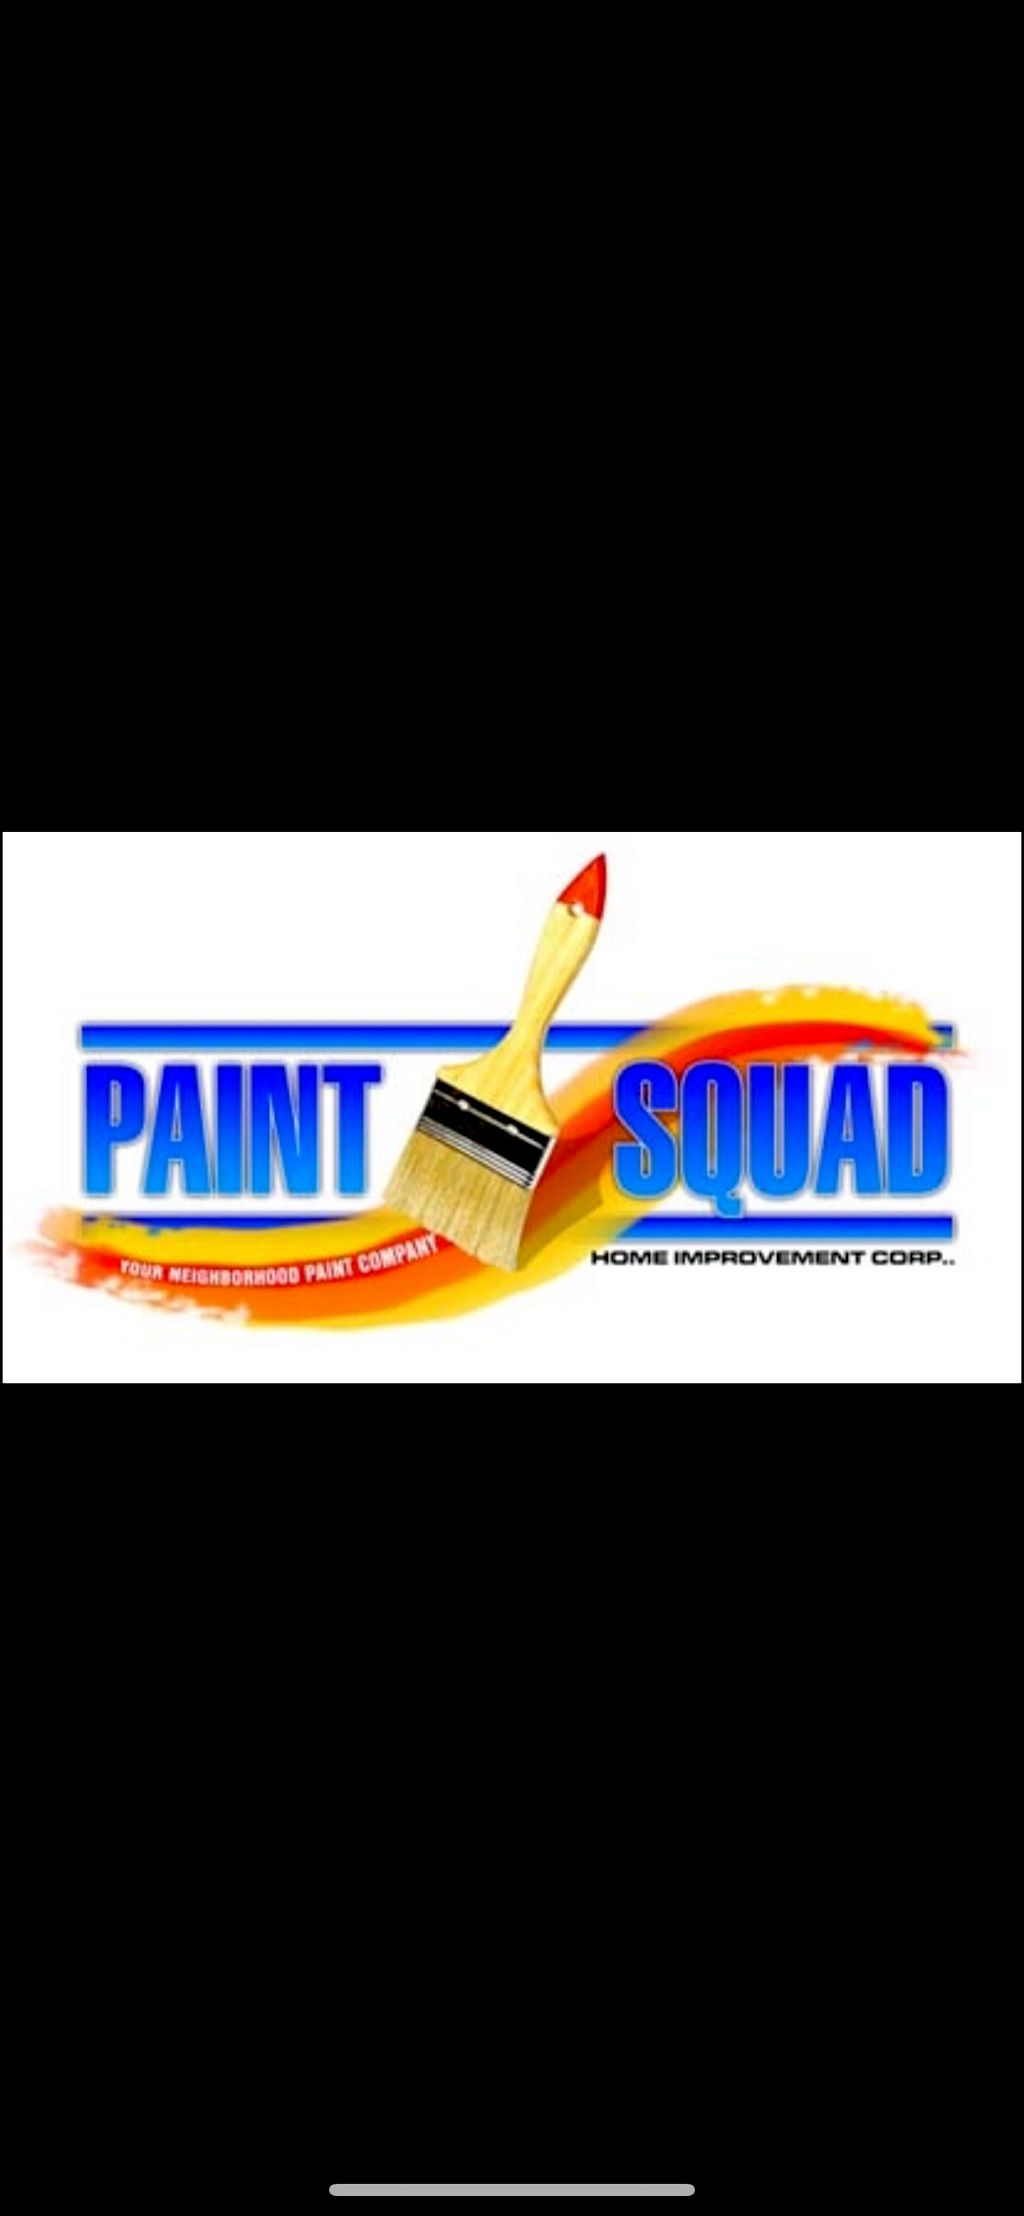 Paint squad of Orlando